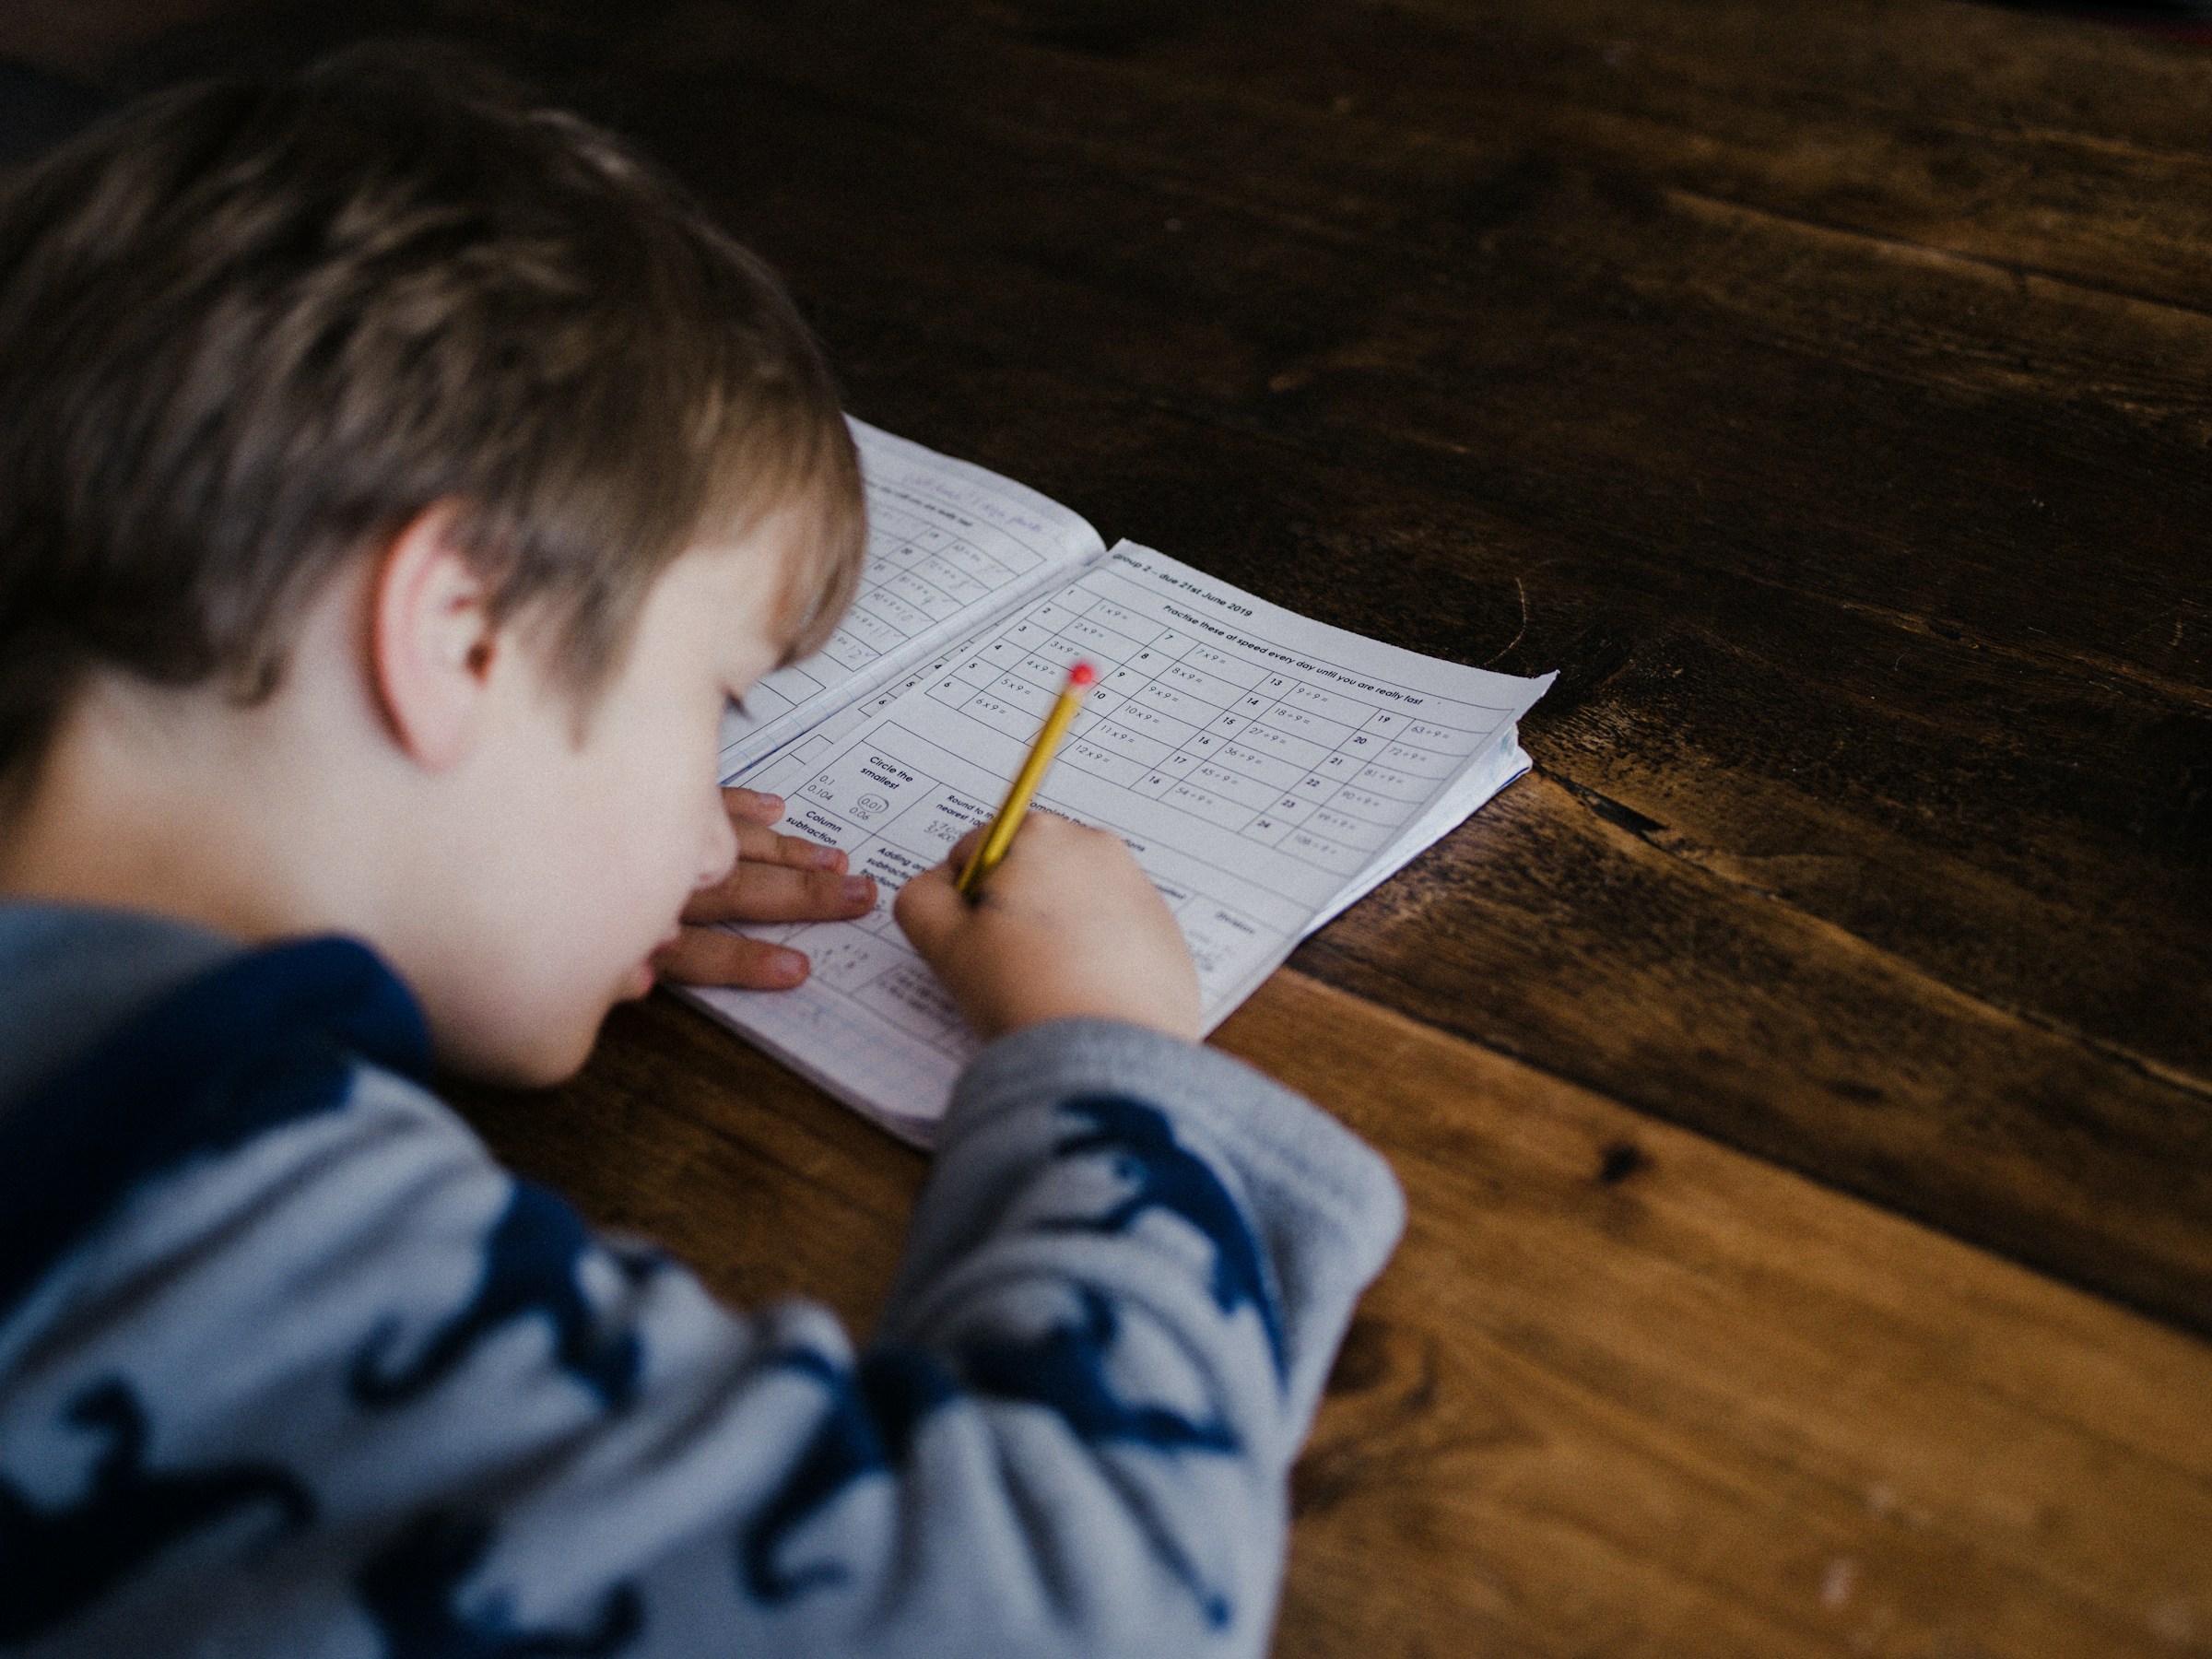 A little boy completing his homework | Source: Unsplash